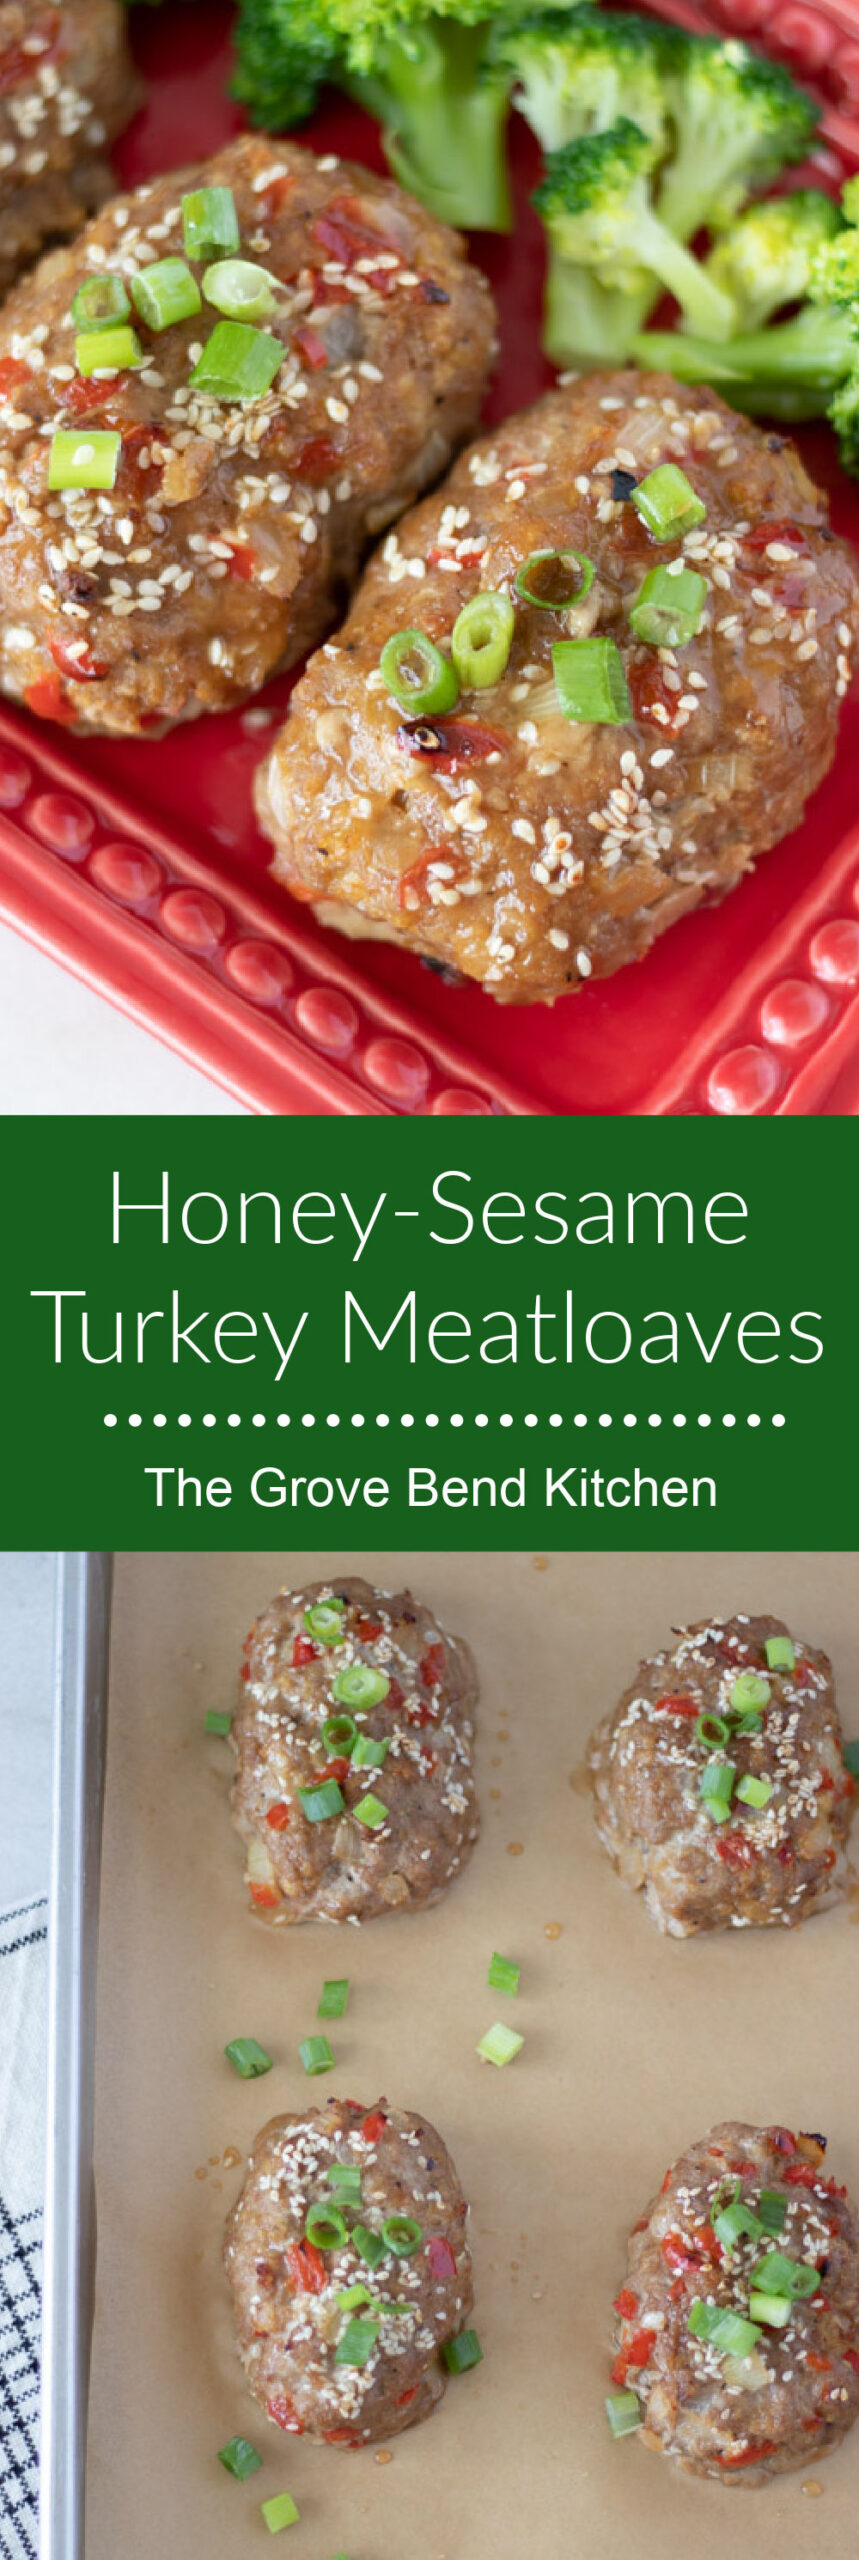 Honey-Sesame Turkey Meatloaves - The Grove Bend Kitchen